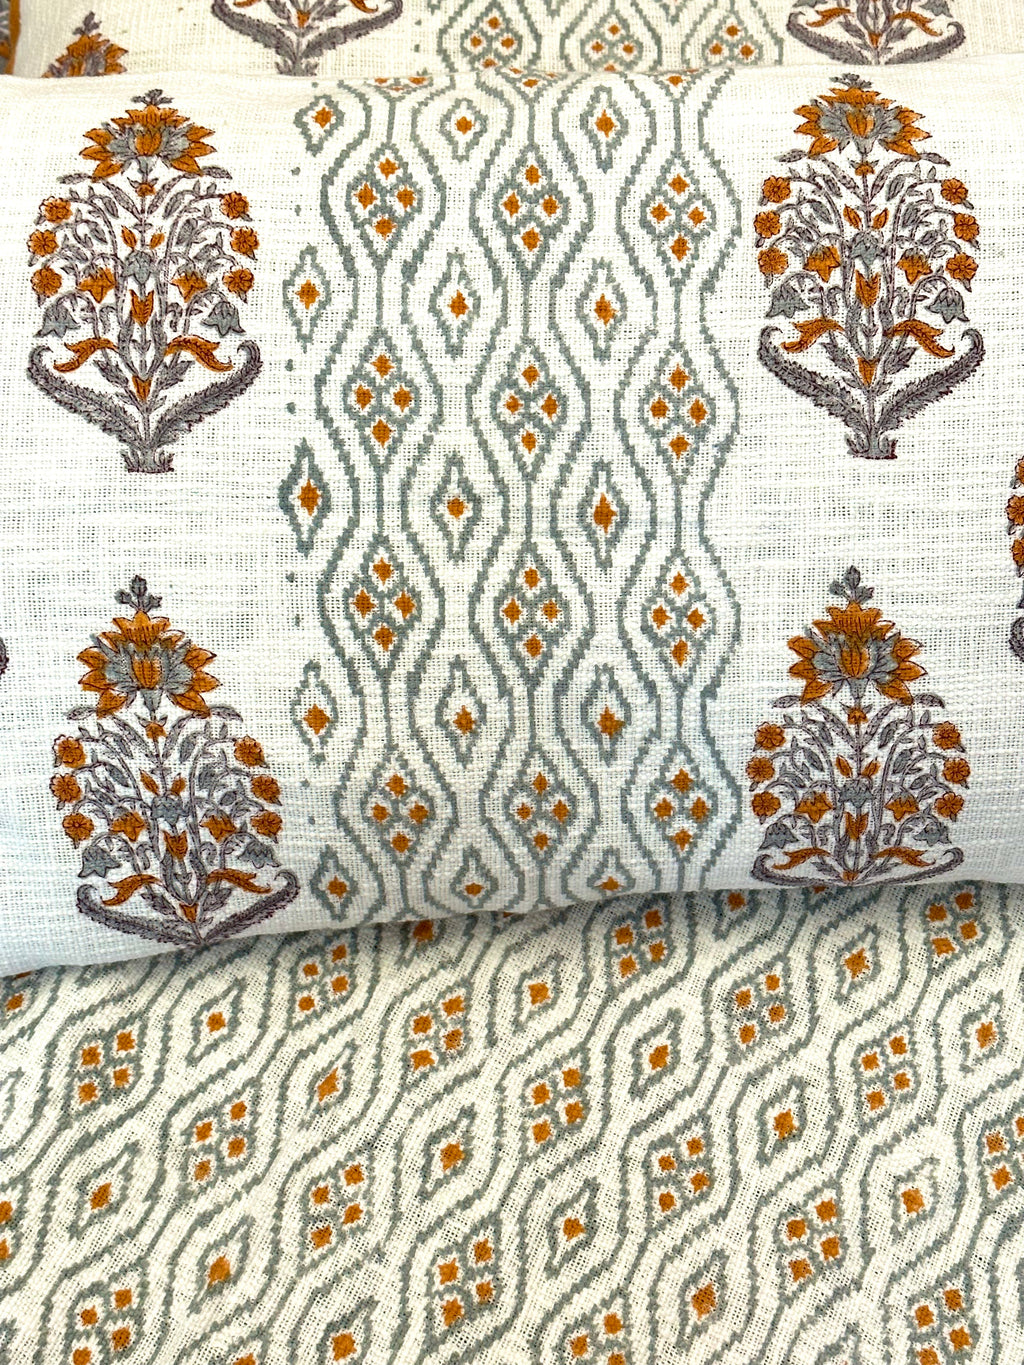 Block Print Handloom Bed Cover Set - Mustard and Grey Large Floral Motifs